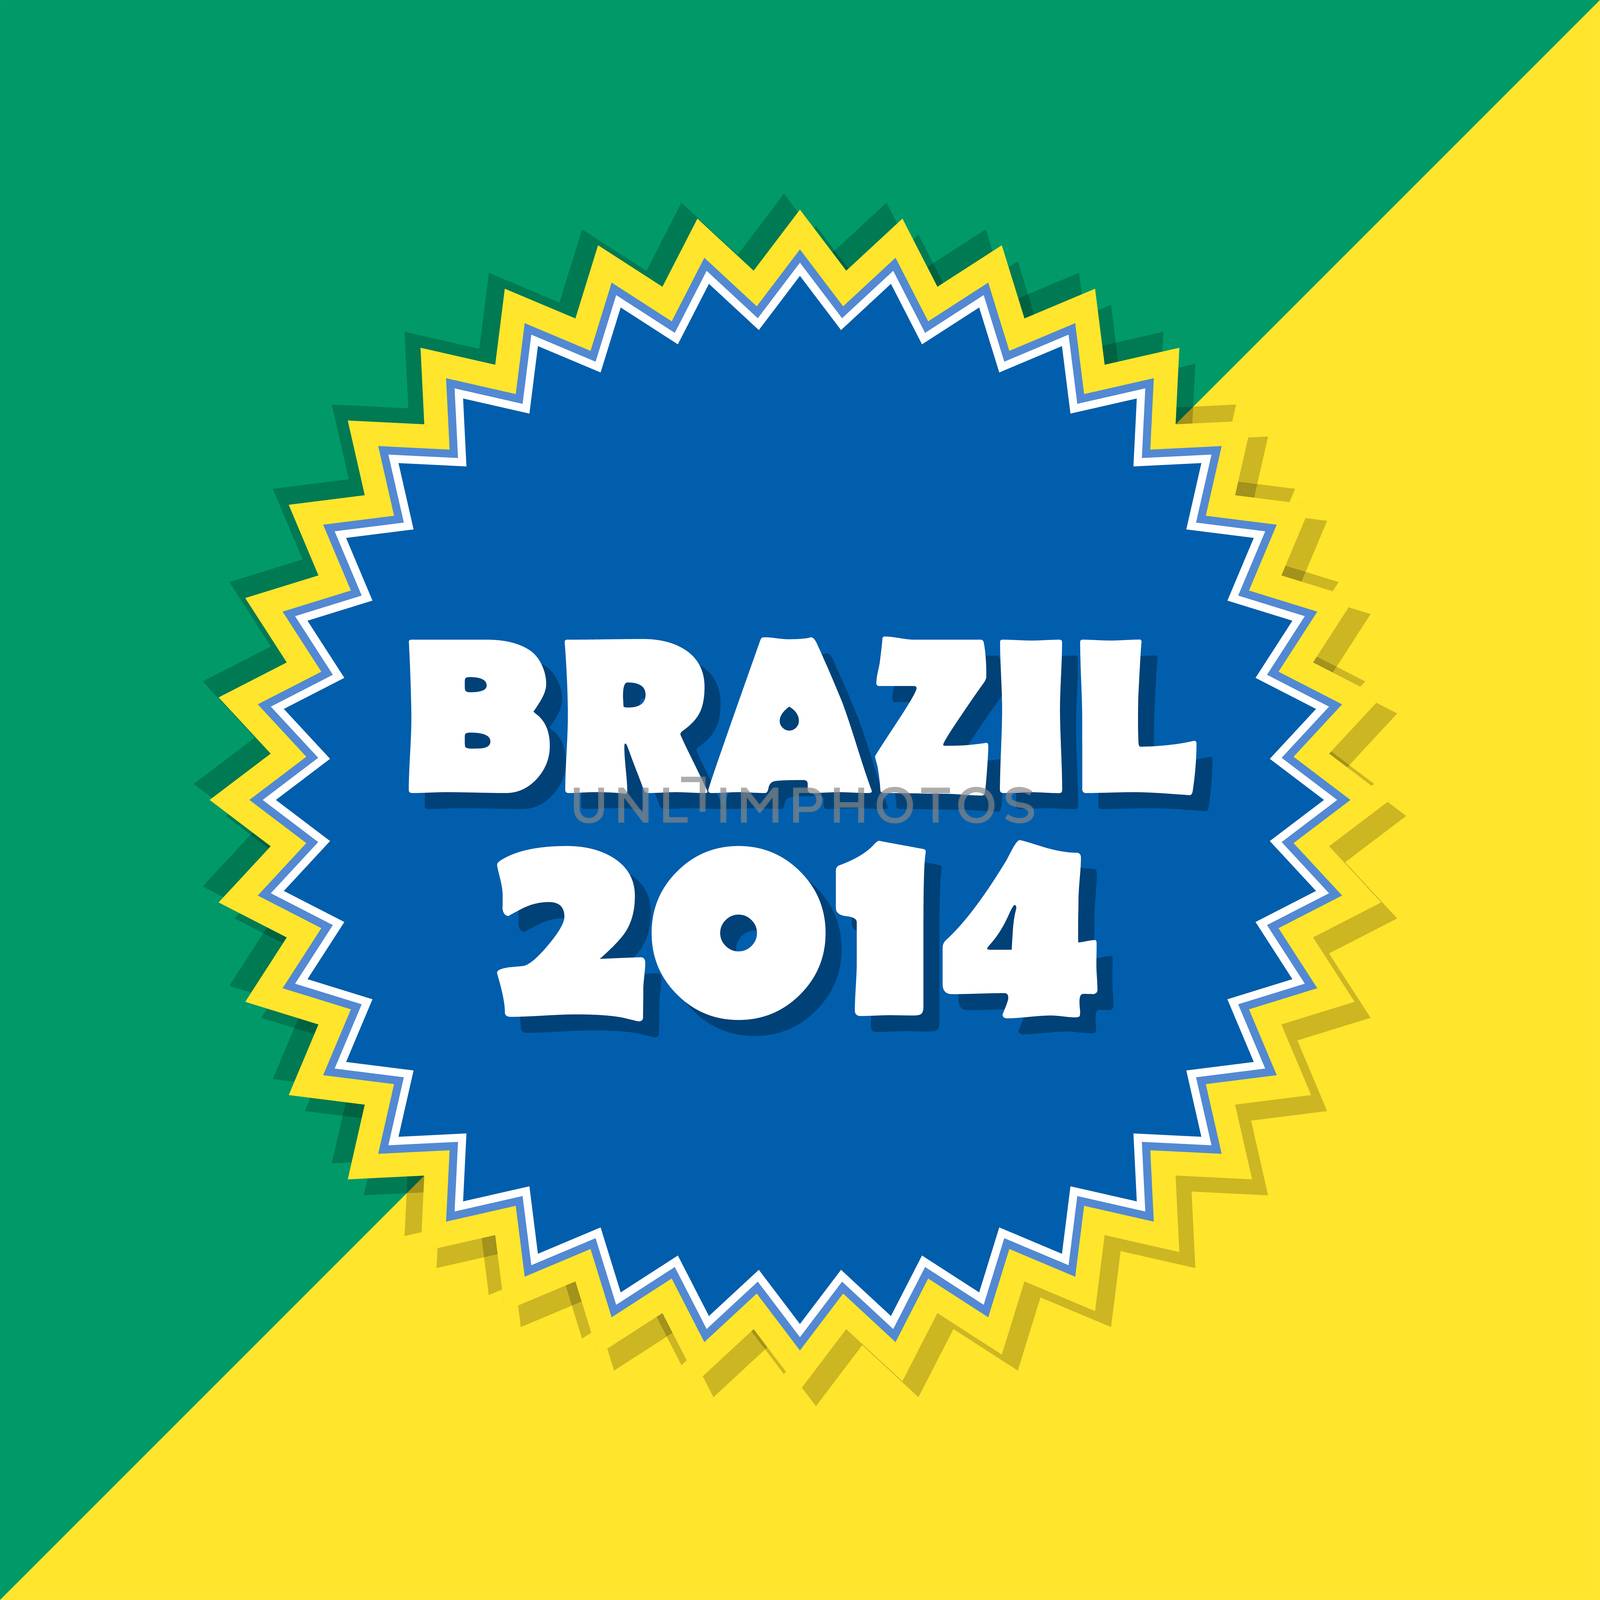 Brazil 2014, retro abstract design, football sport concept label